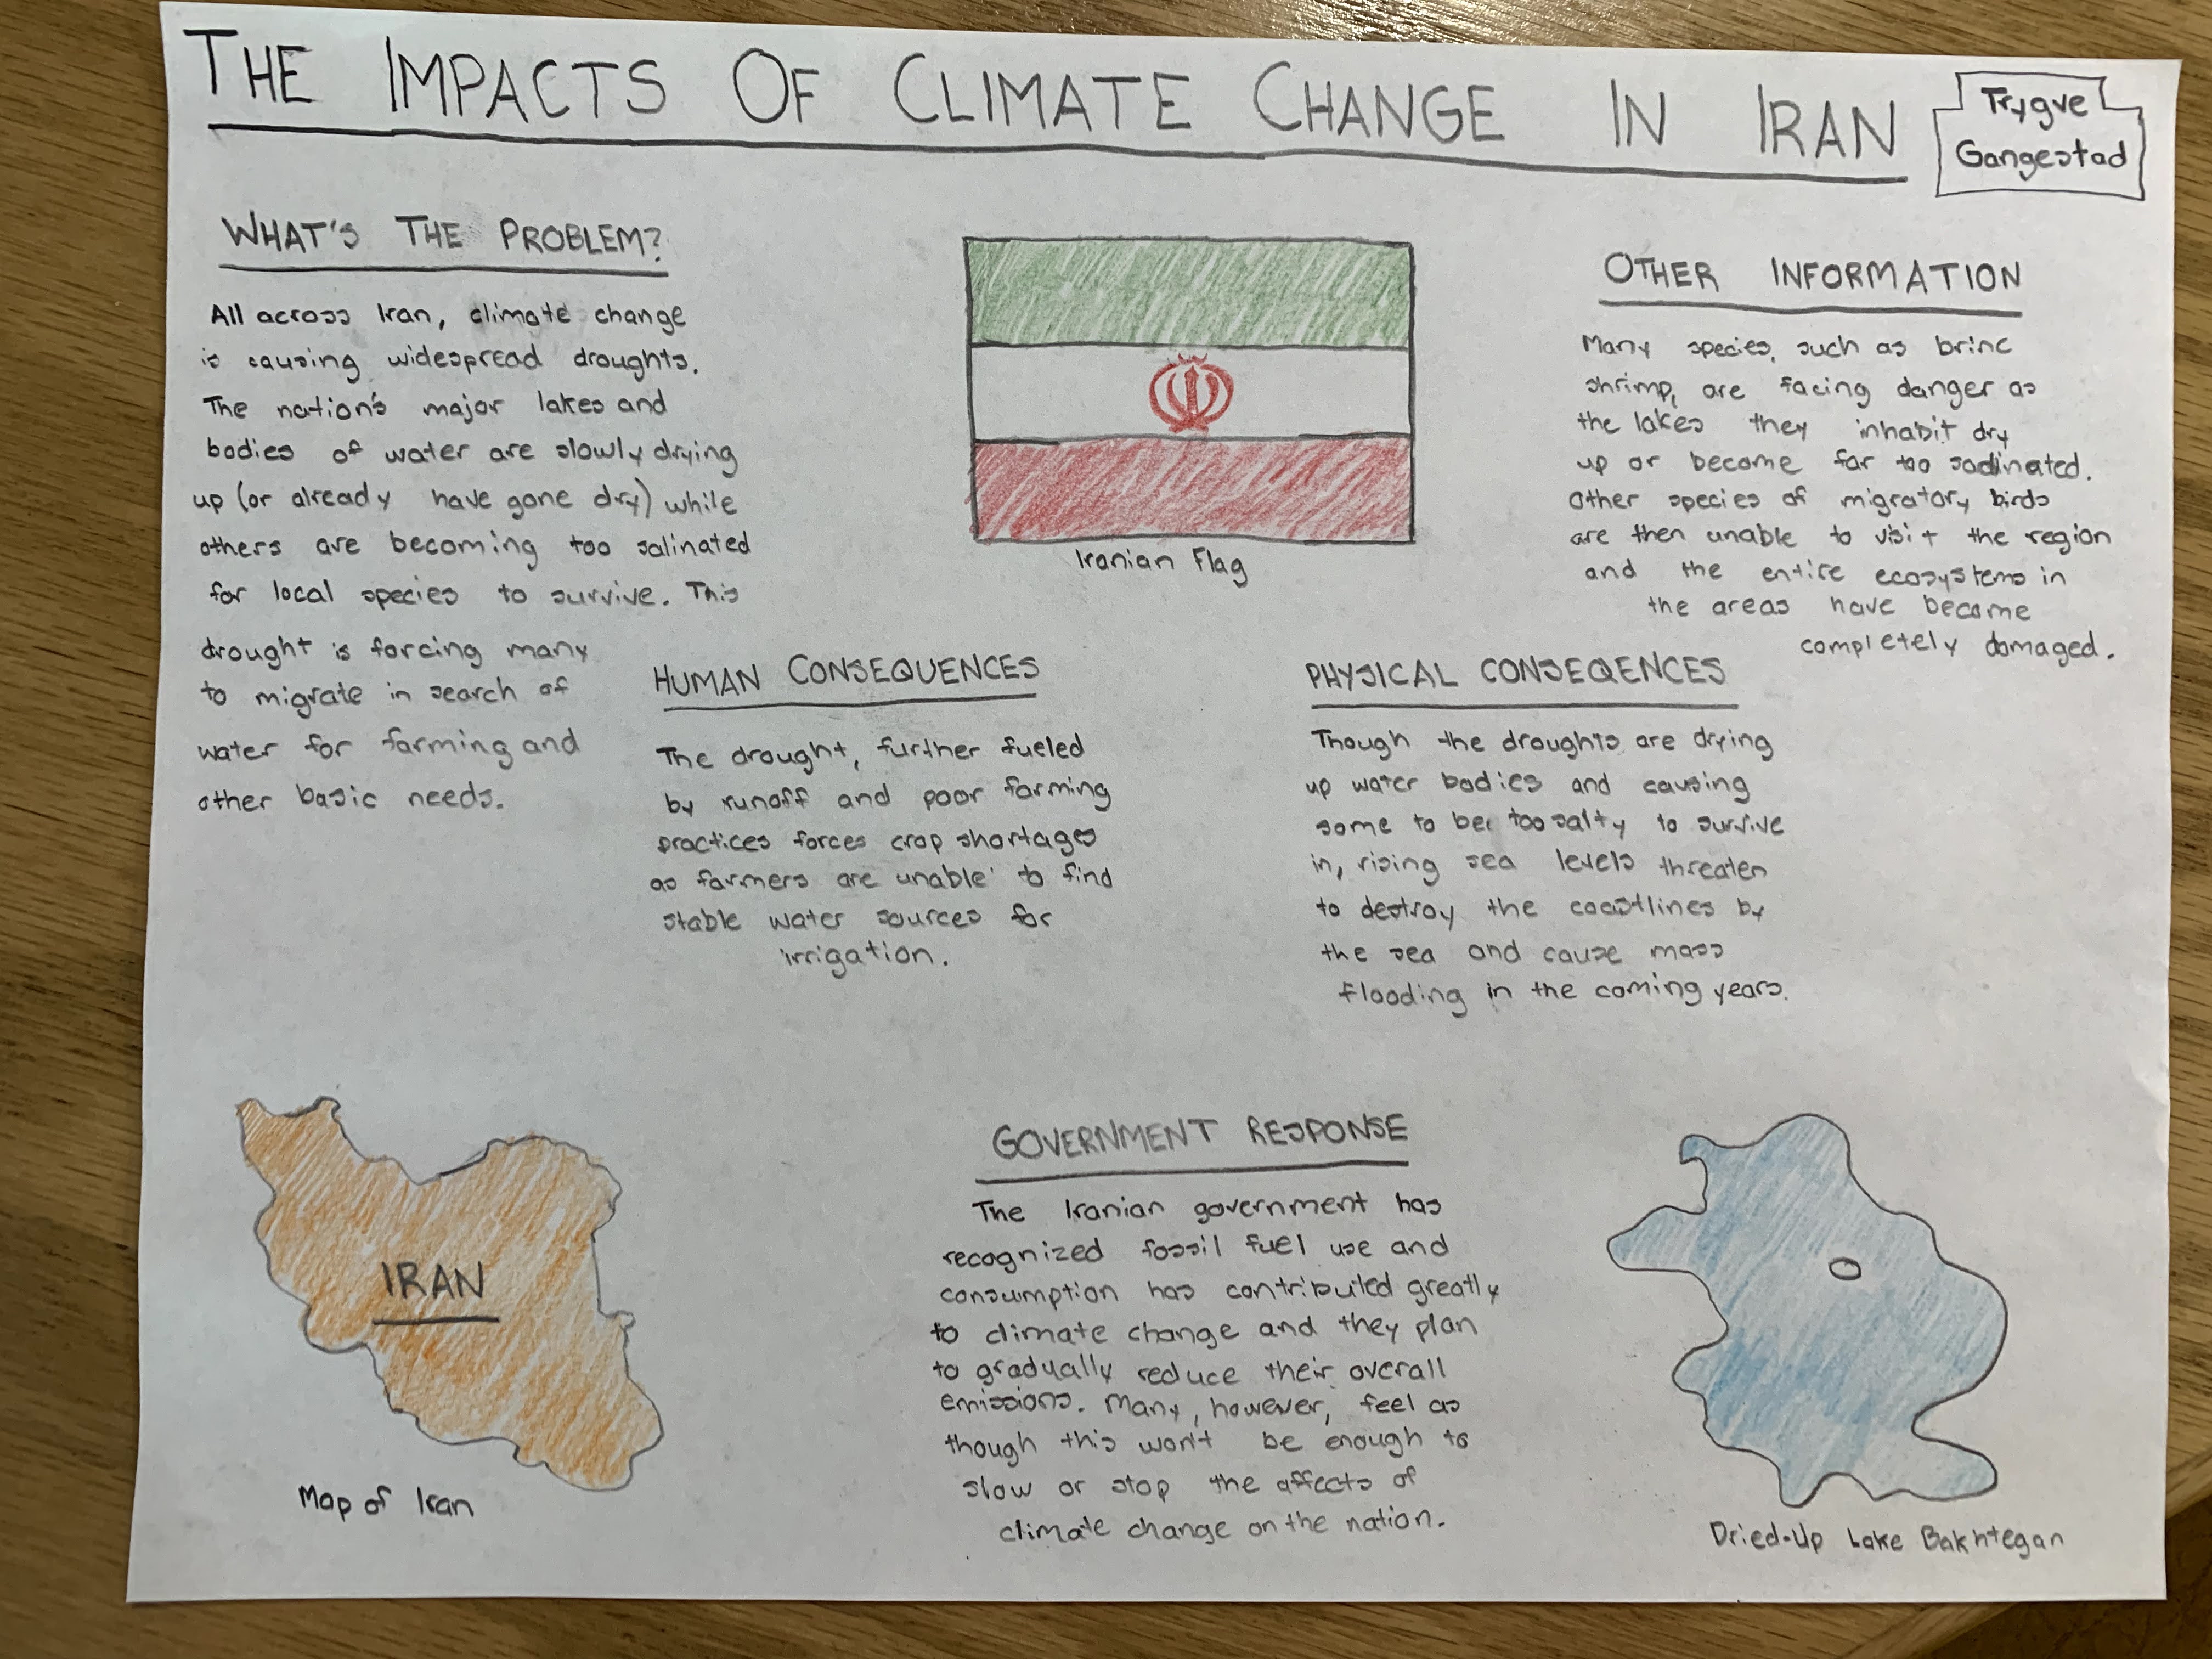 Student work sample: Graphic organizers summarizing global climate change in Iran